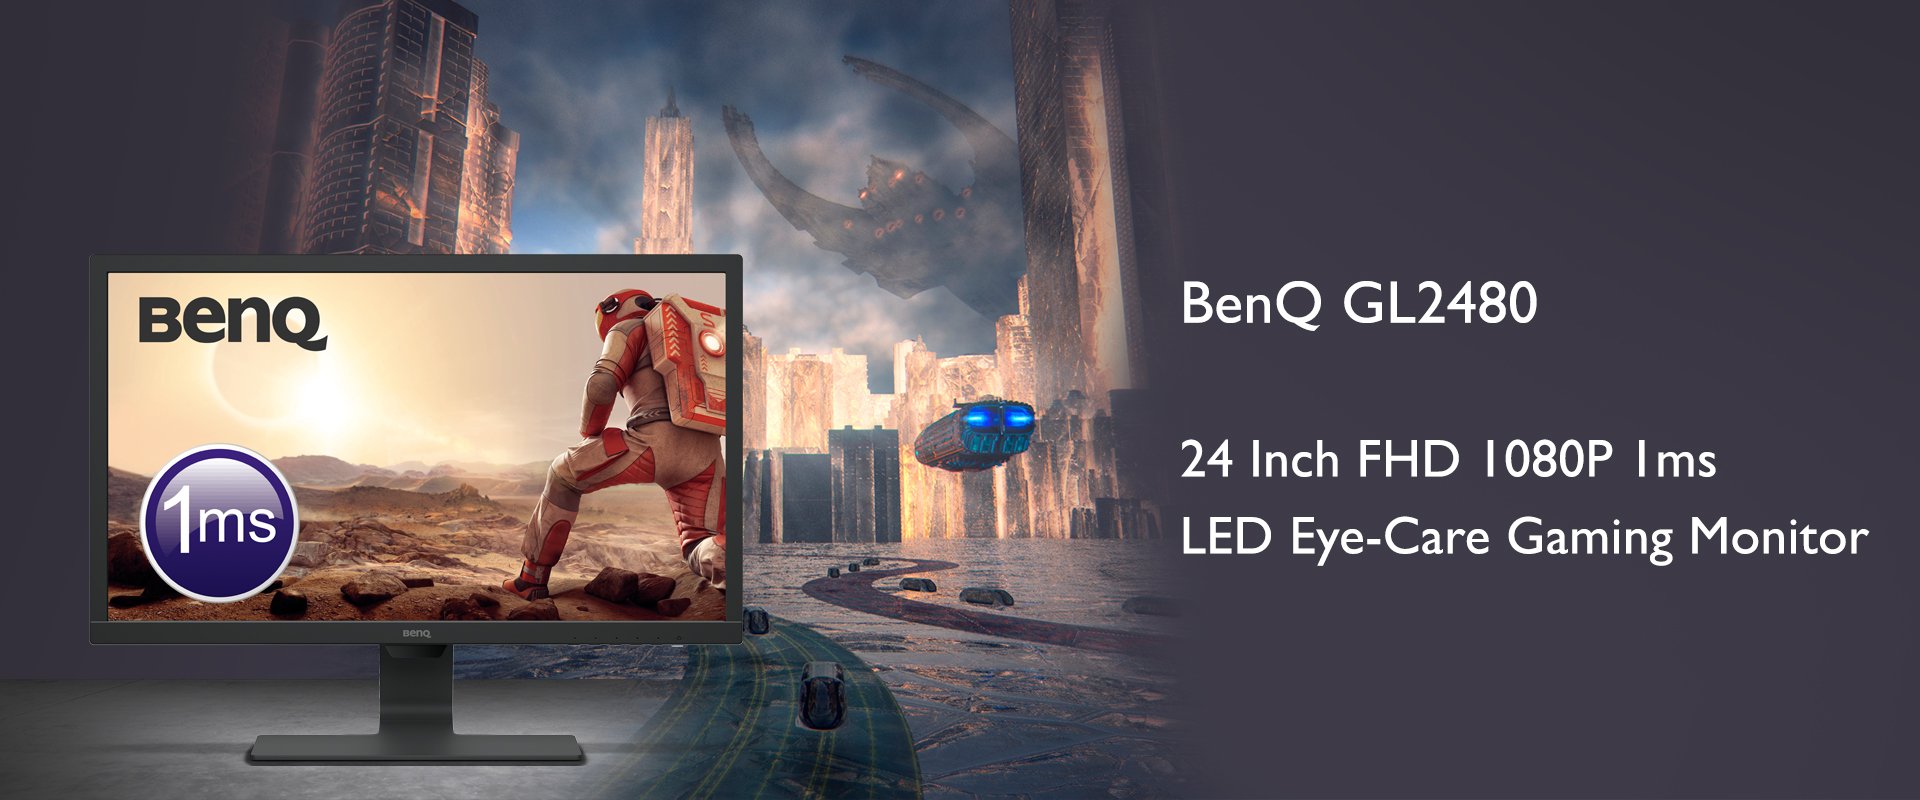 benq eyecare stylish monitor provides streamlined productivity and simplified lifestyle